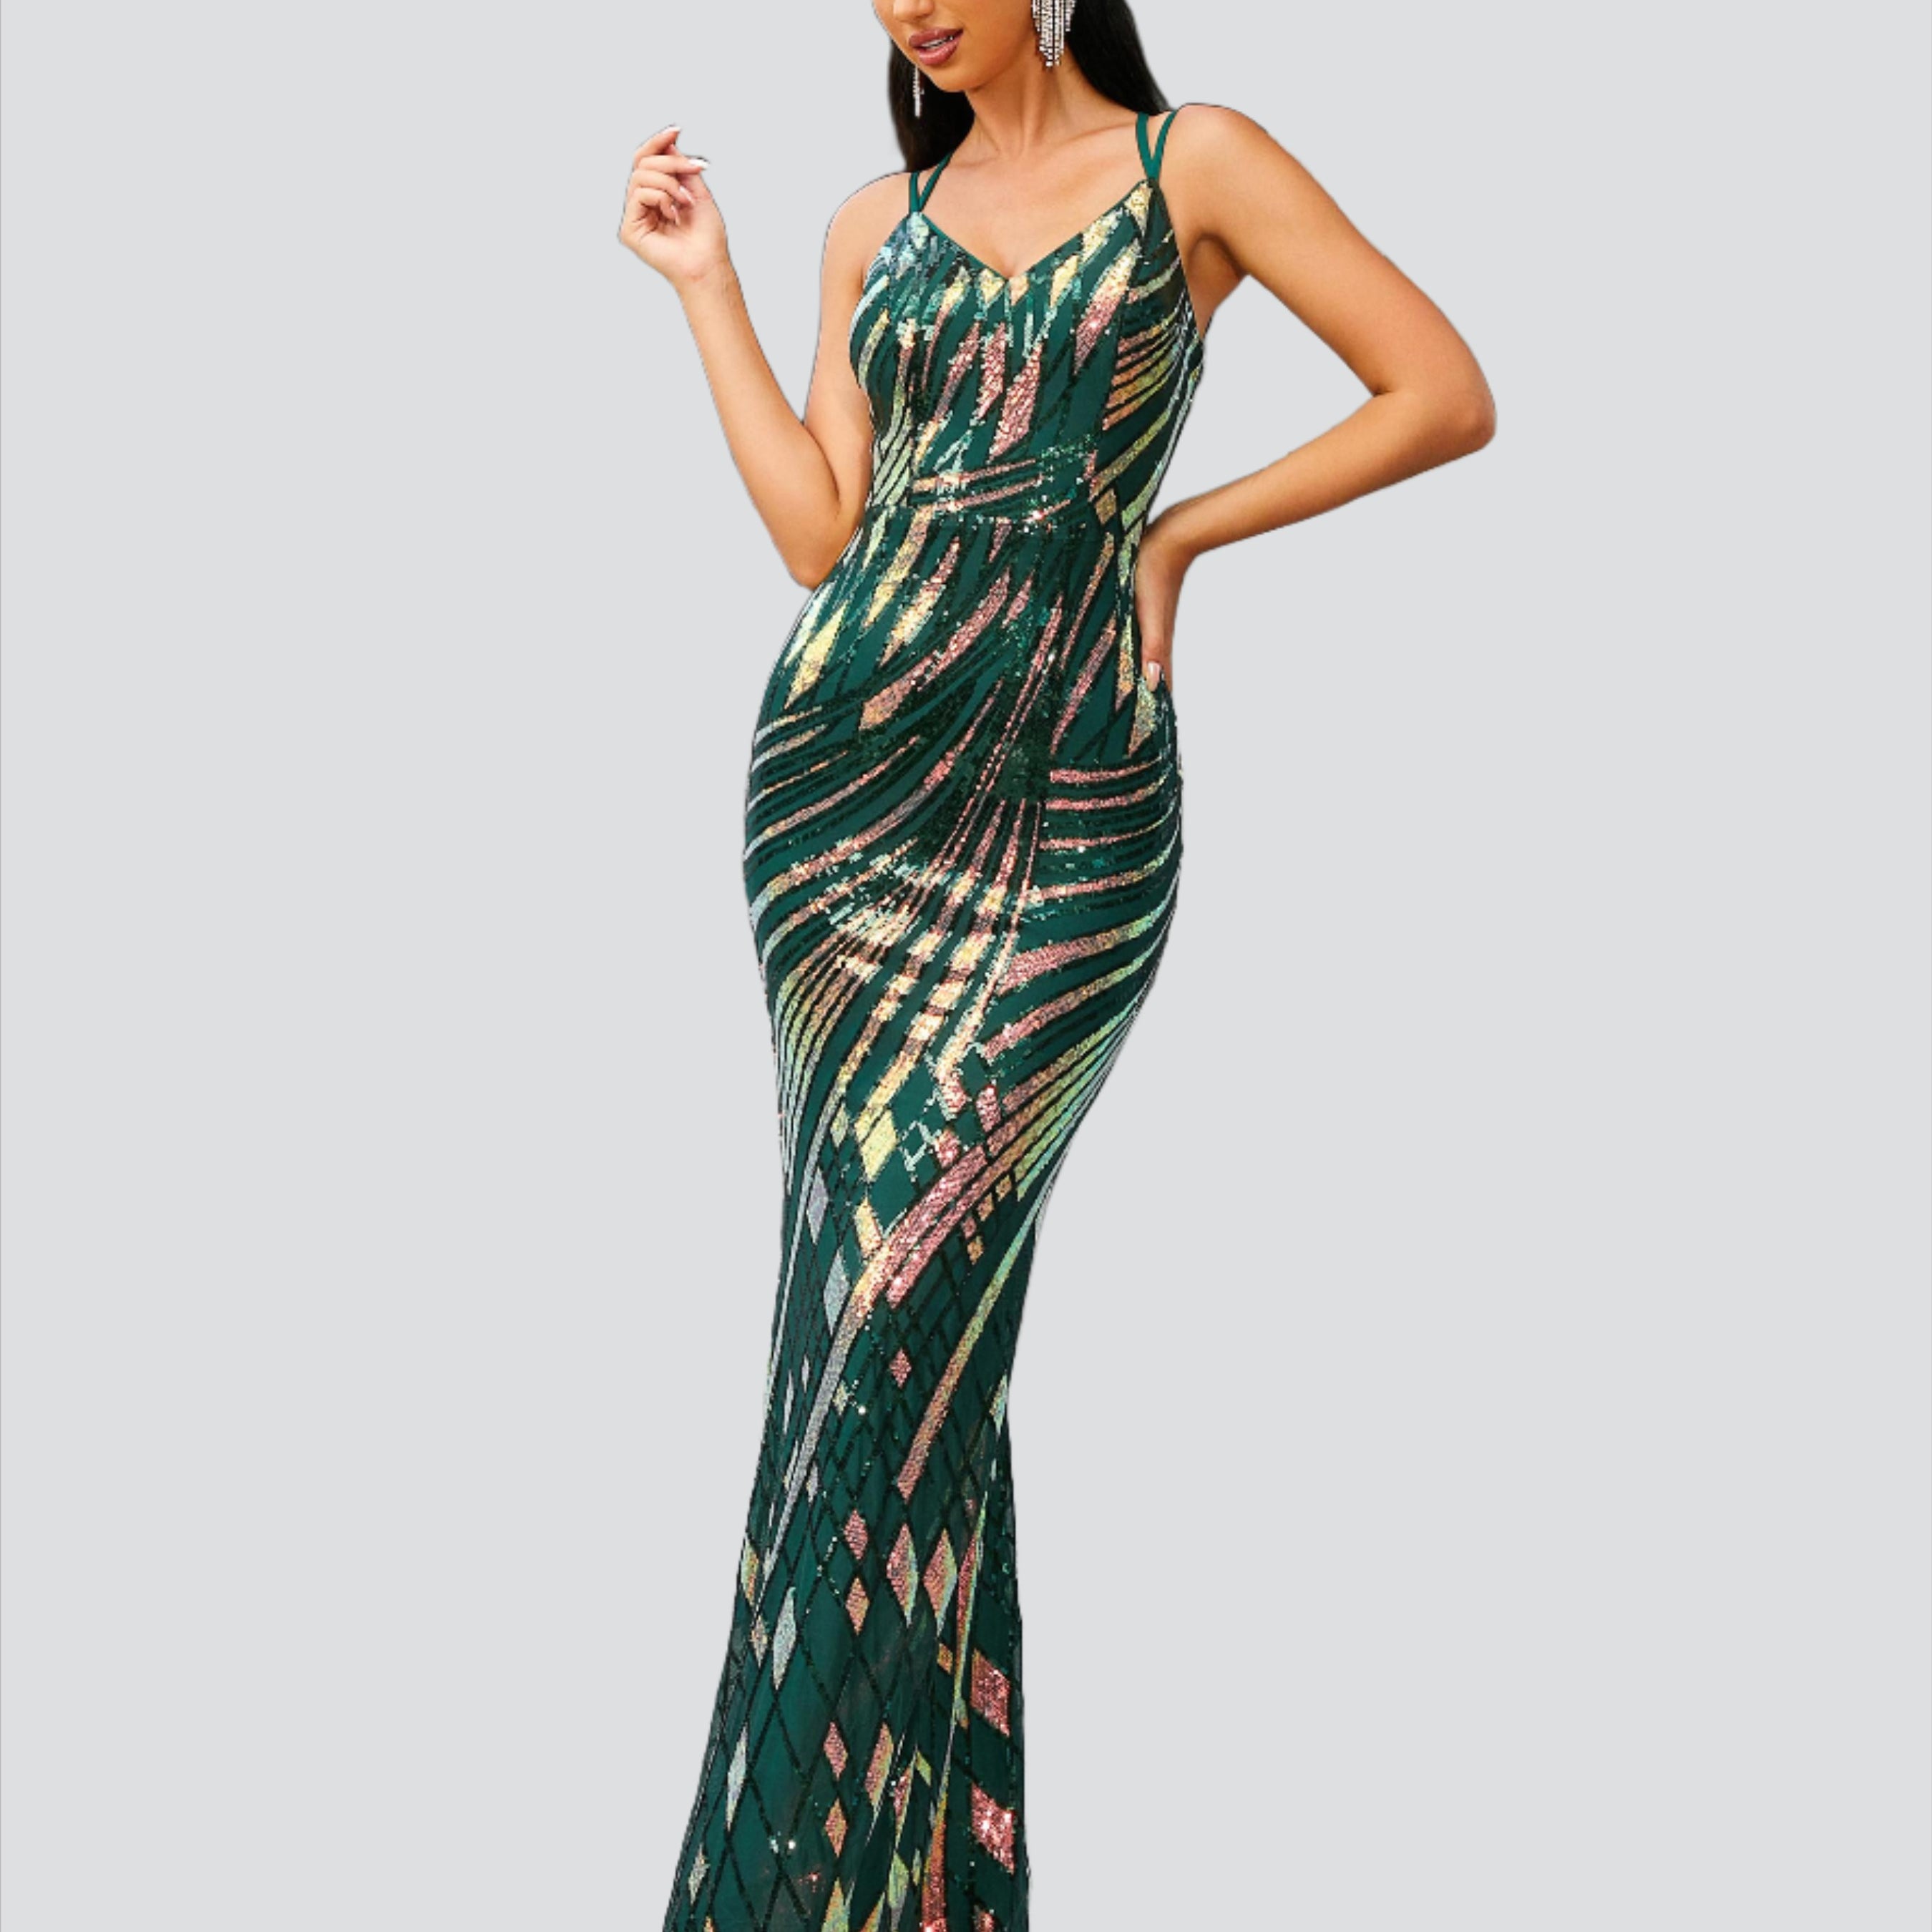 Spaghetti V-Neck Sleeveless Green Dress RH30653